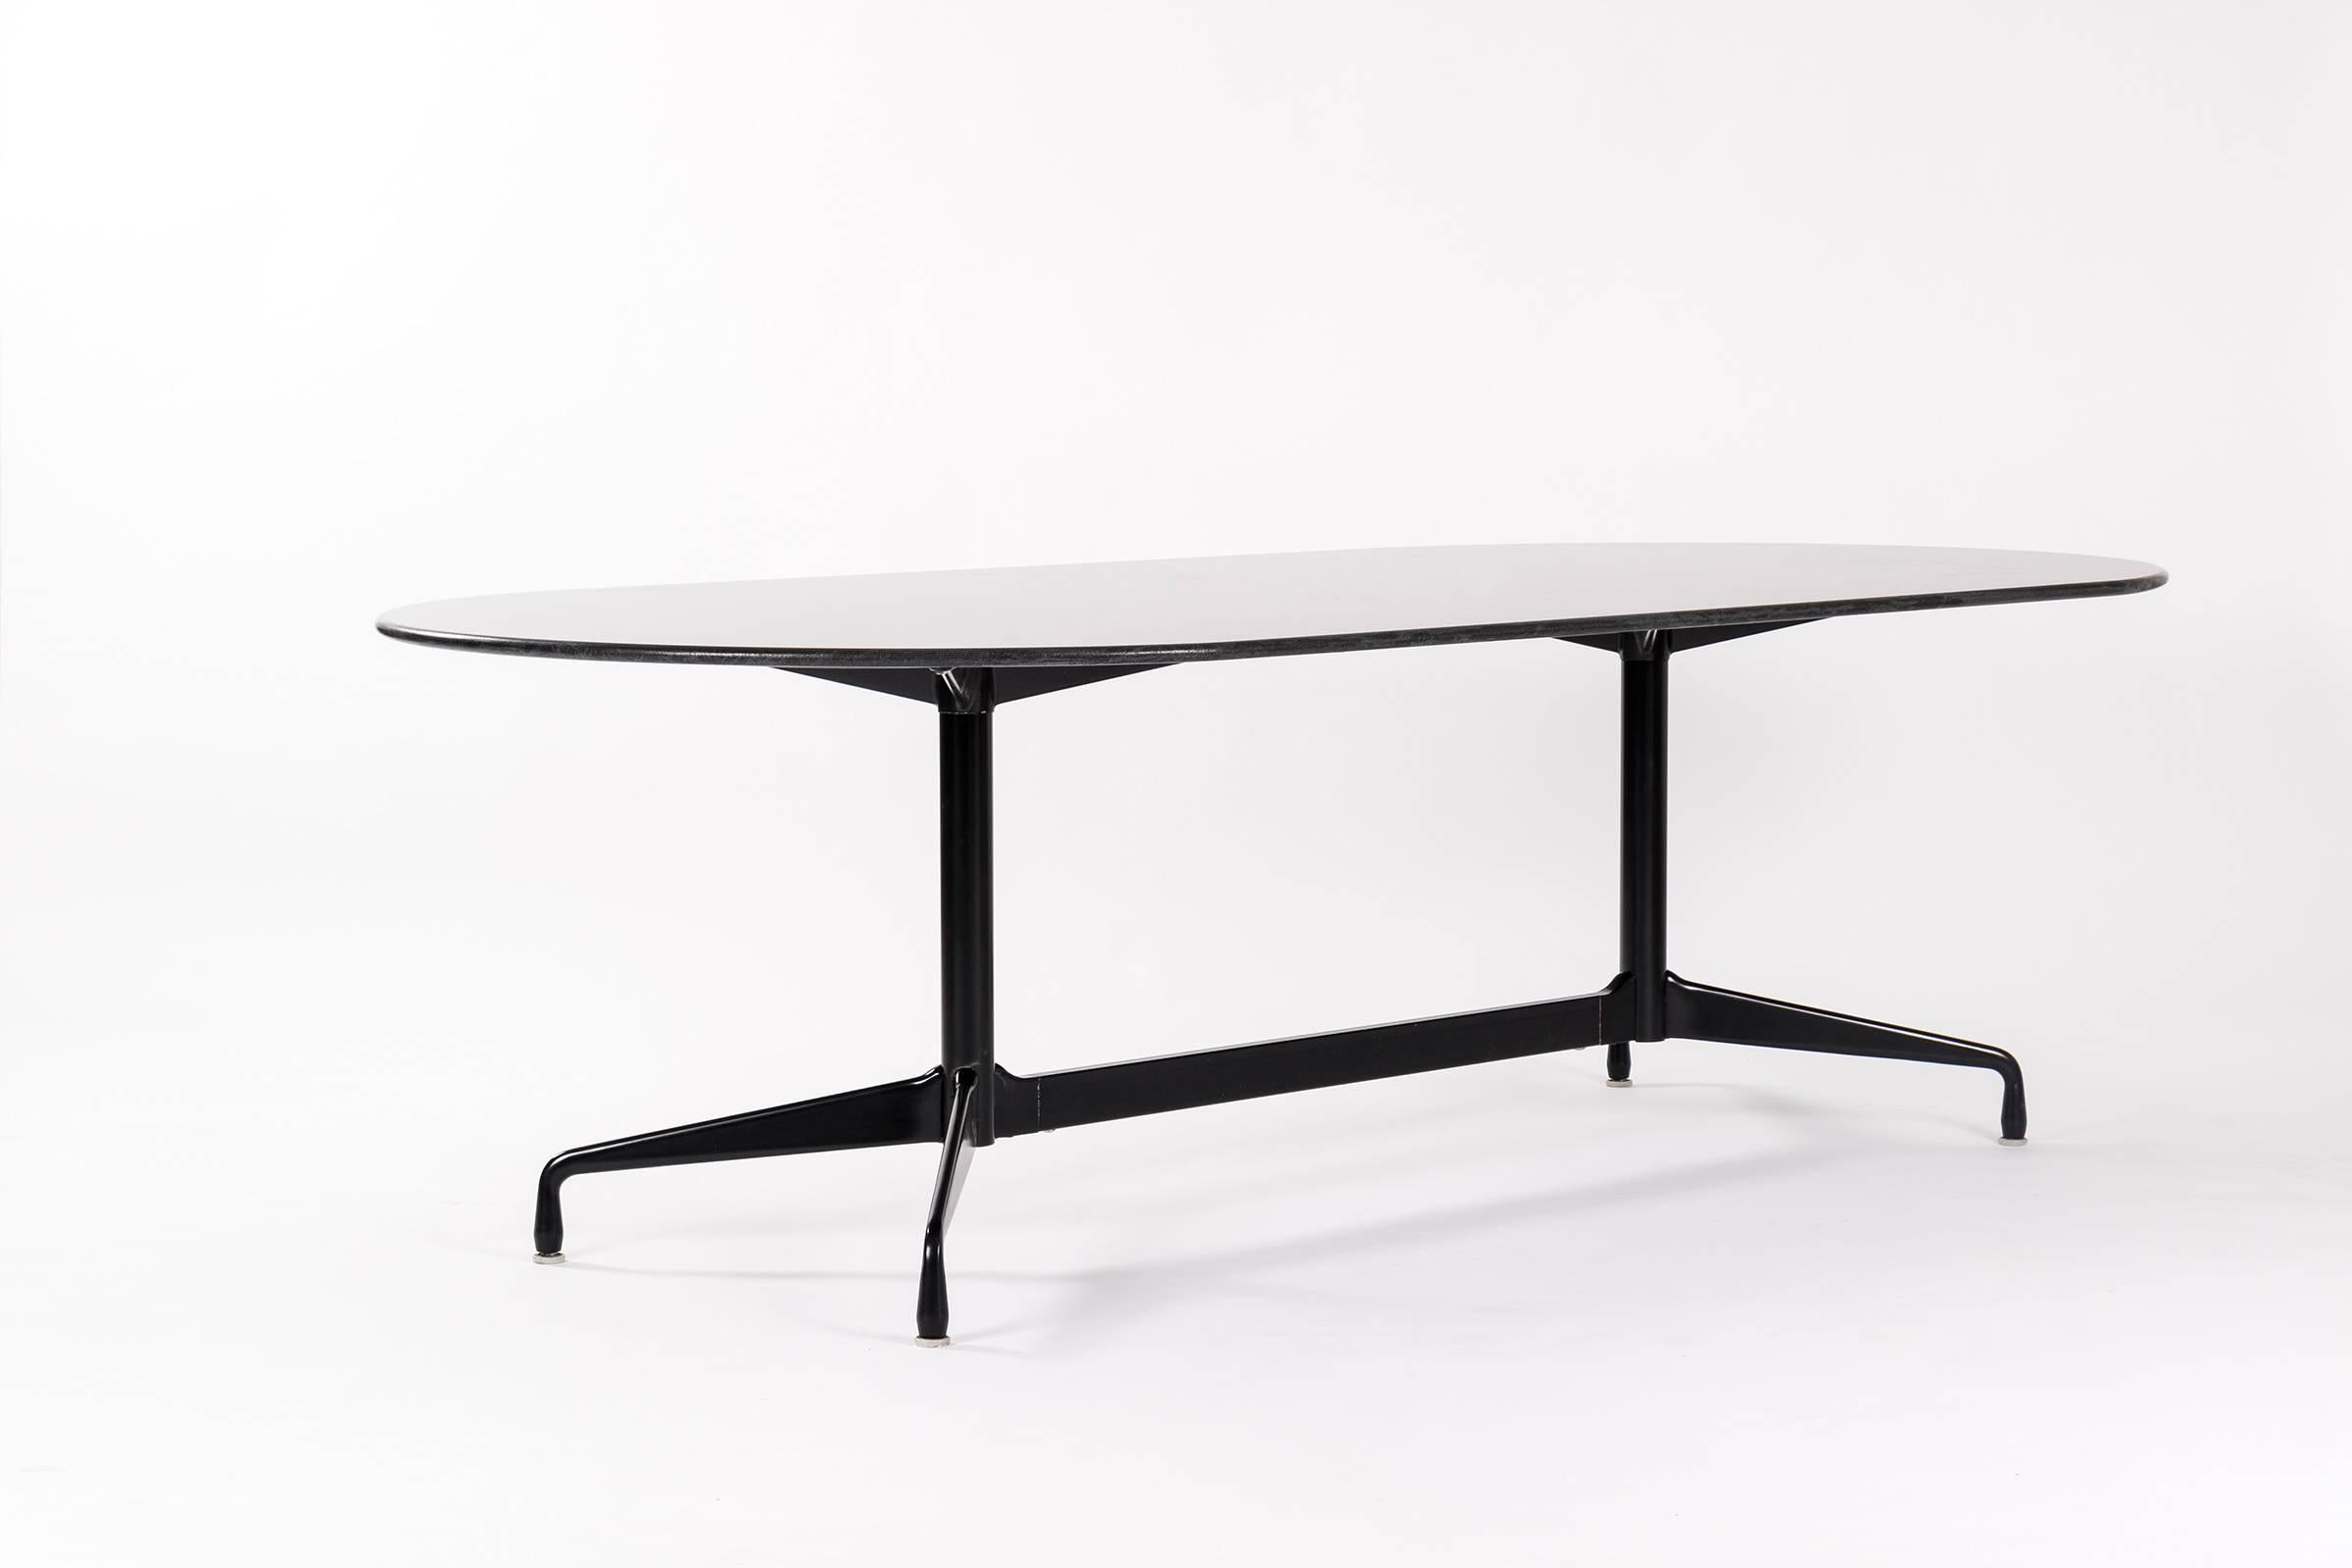 Custom segmented base table. Racetrack shaped black granite honed top with bull nose edge. Matte black steel and aluminum base.